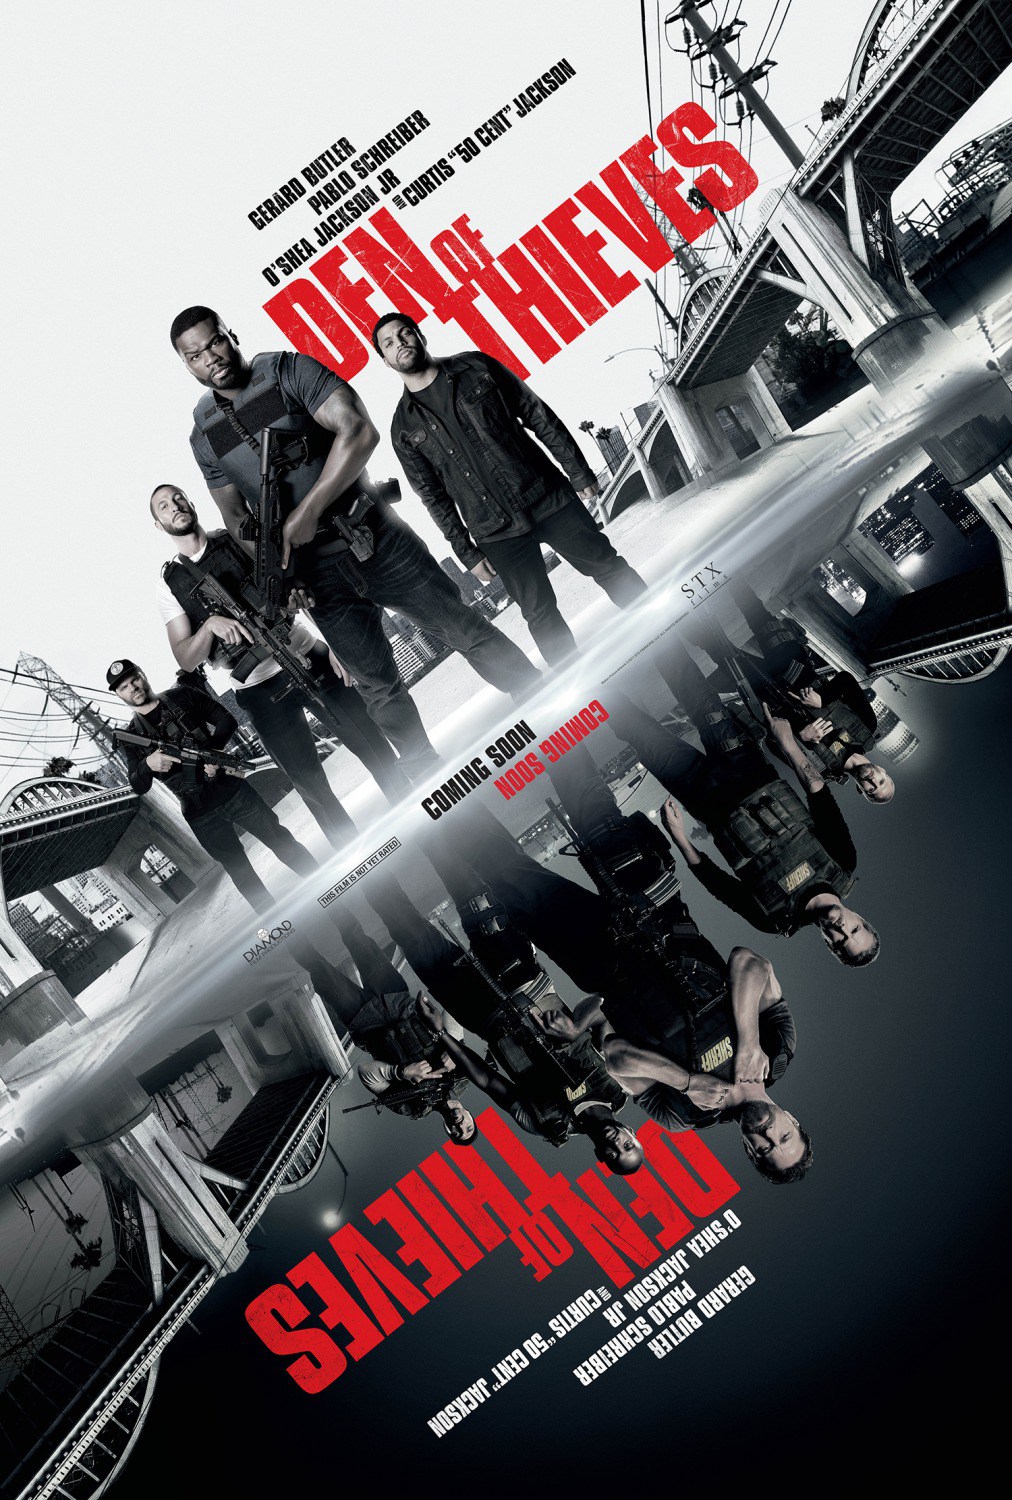 Den-of-Thieves-movie-poster-2.jpg